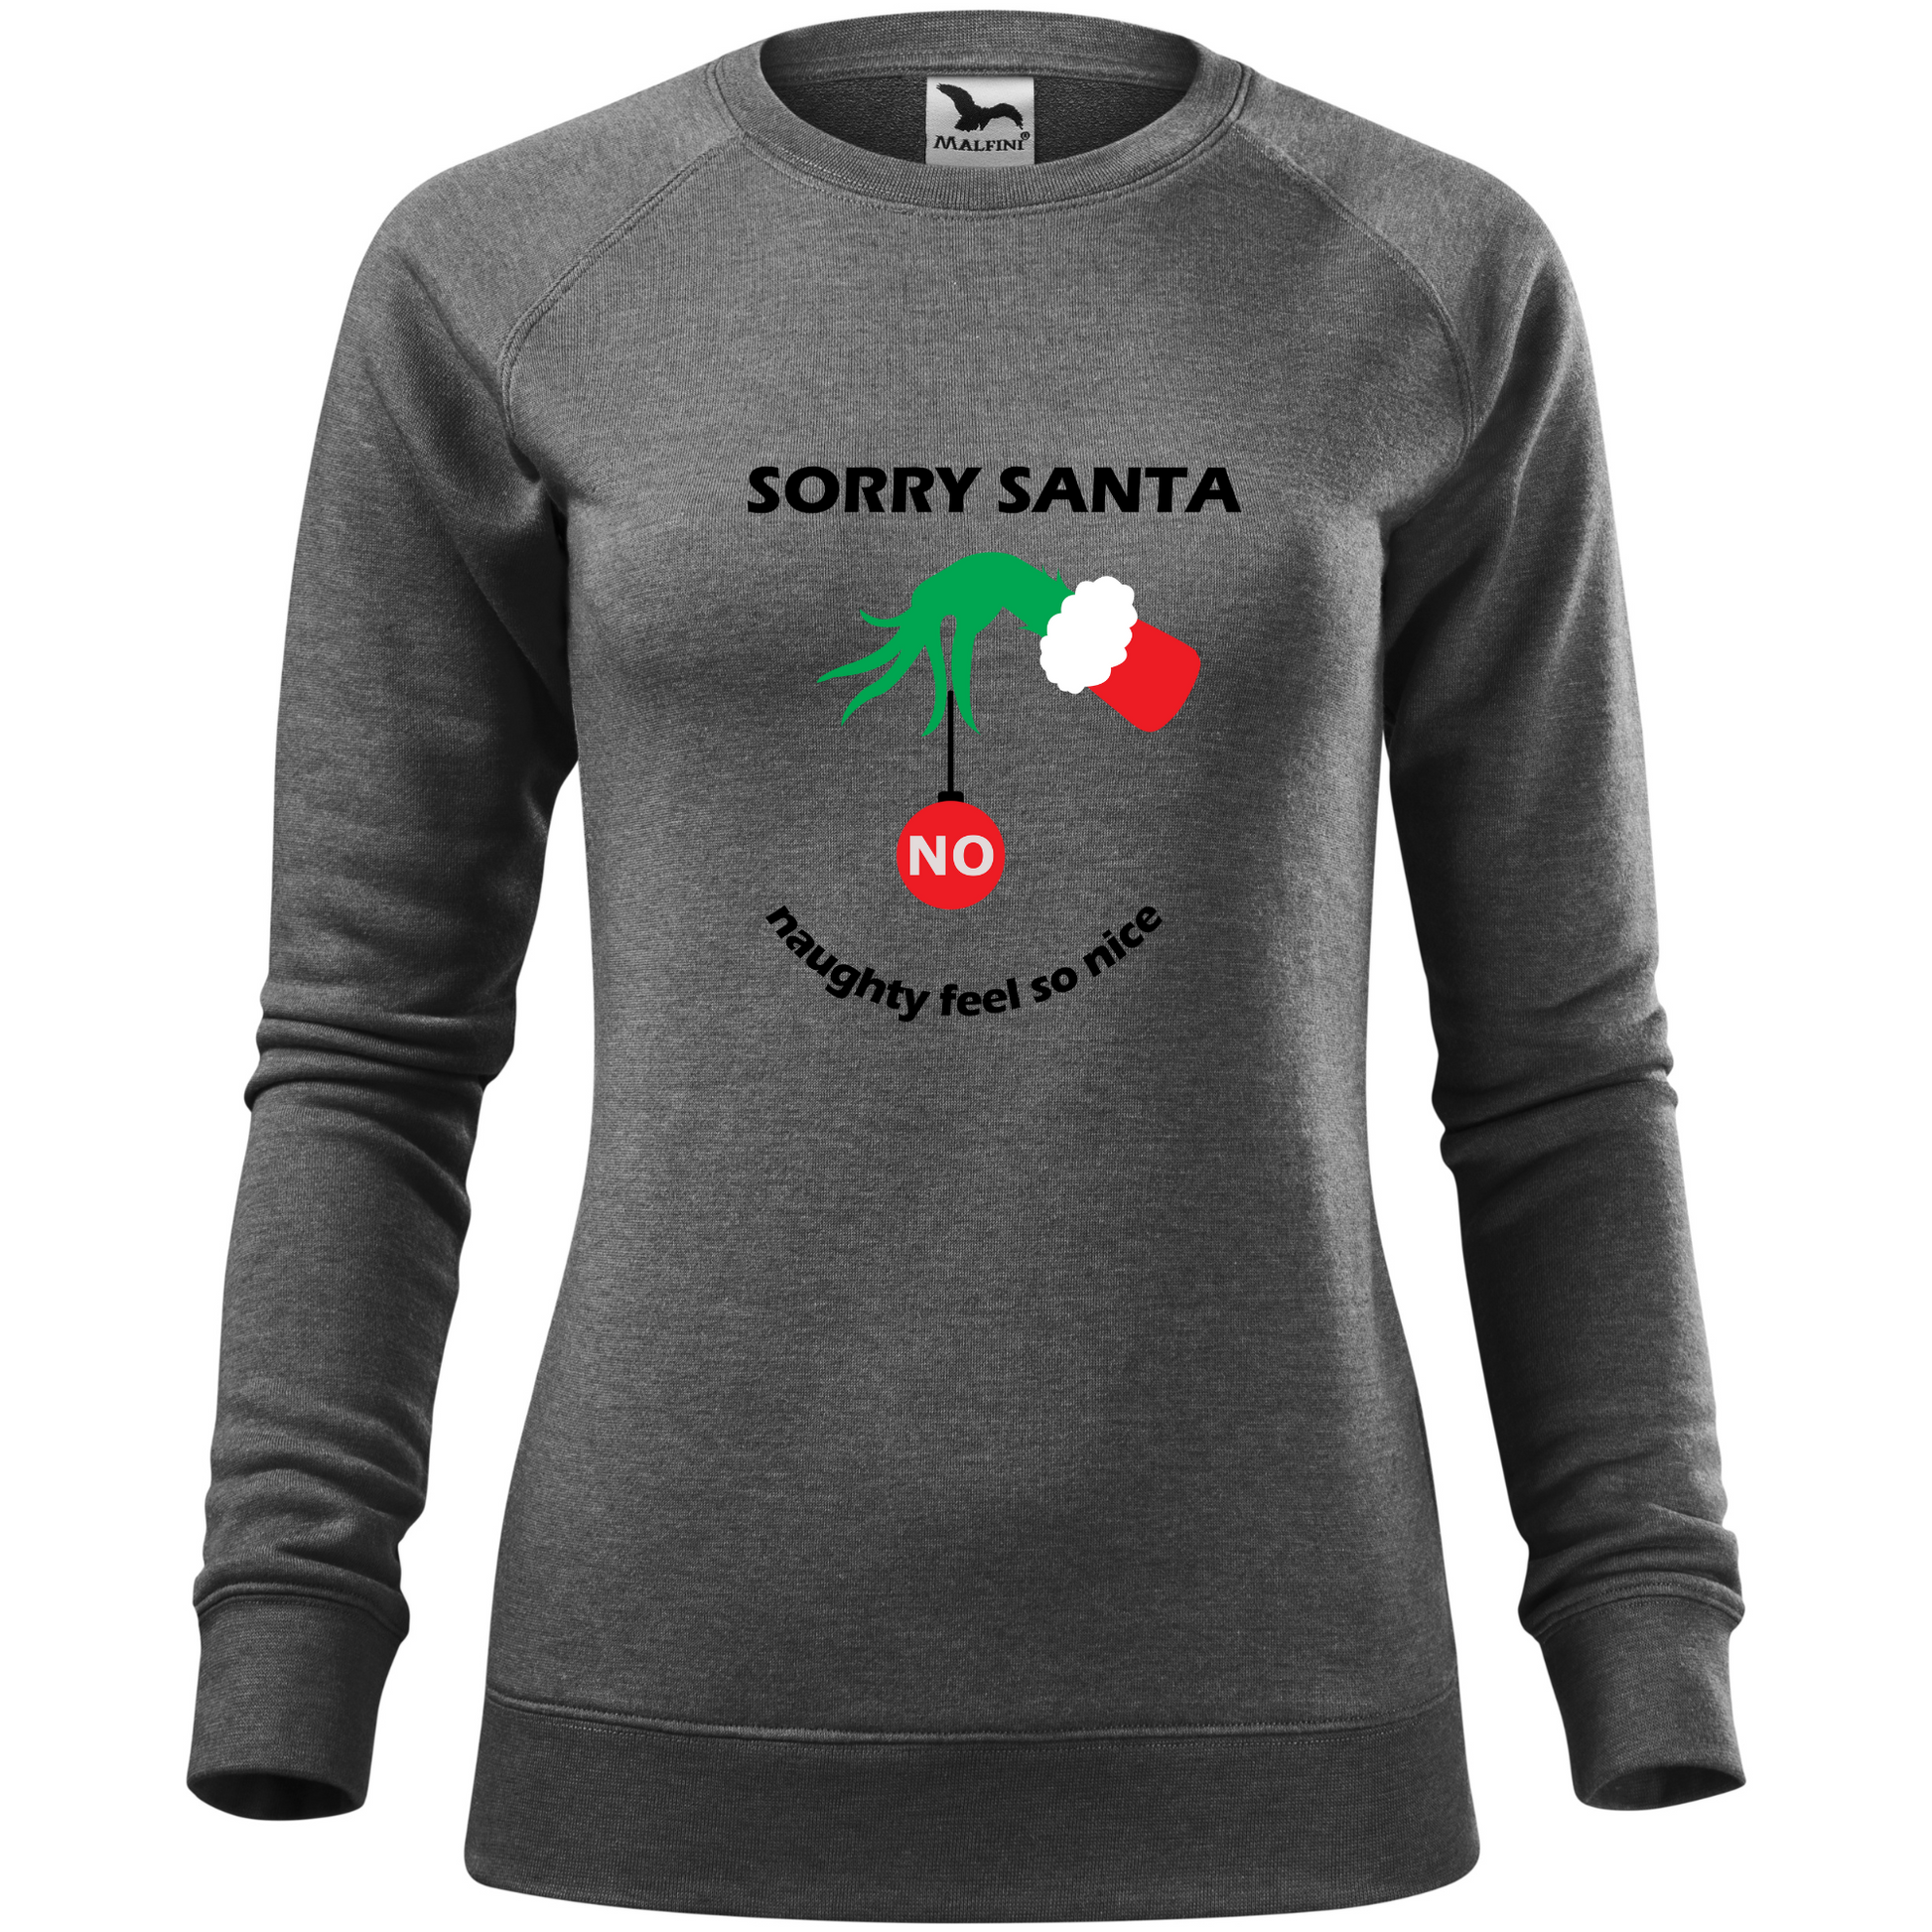 Bluza personalizata Crăciun cu textul Naughty Feels So Nice